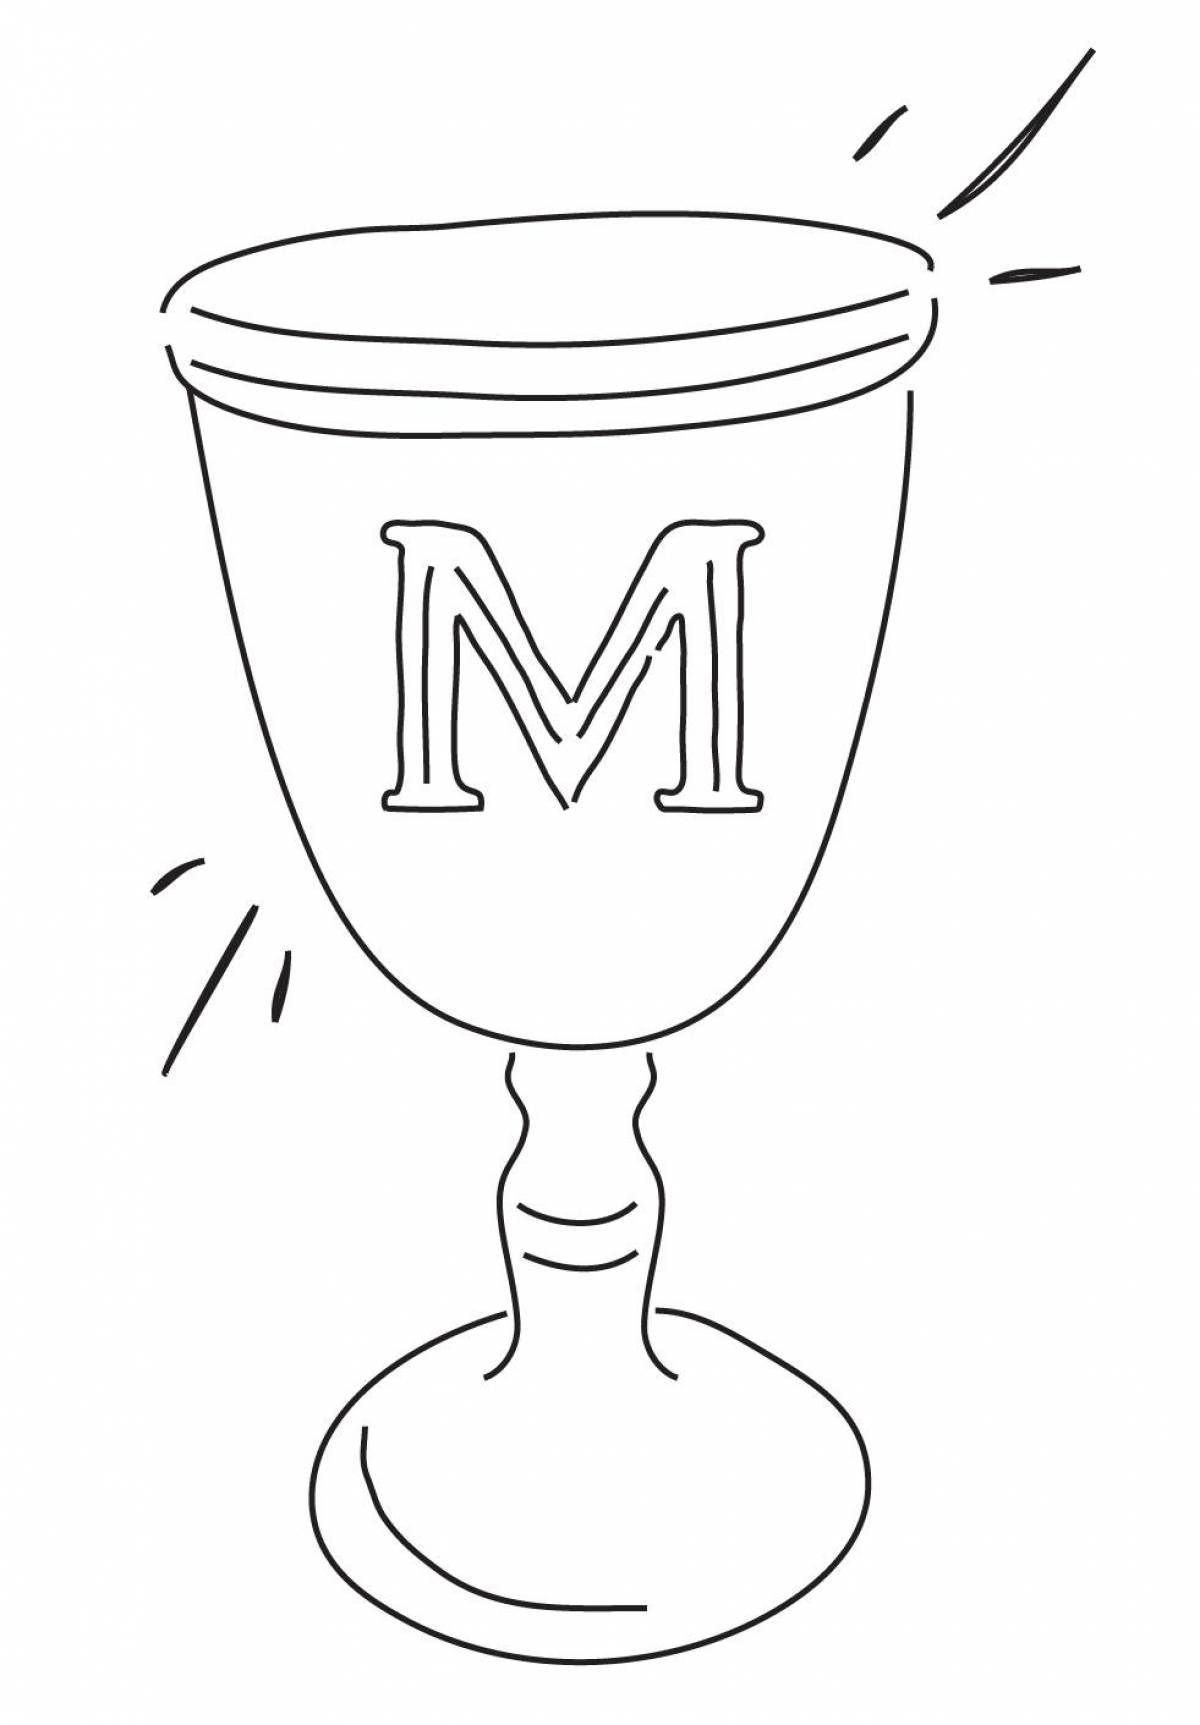 Winner's Cup